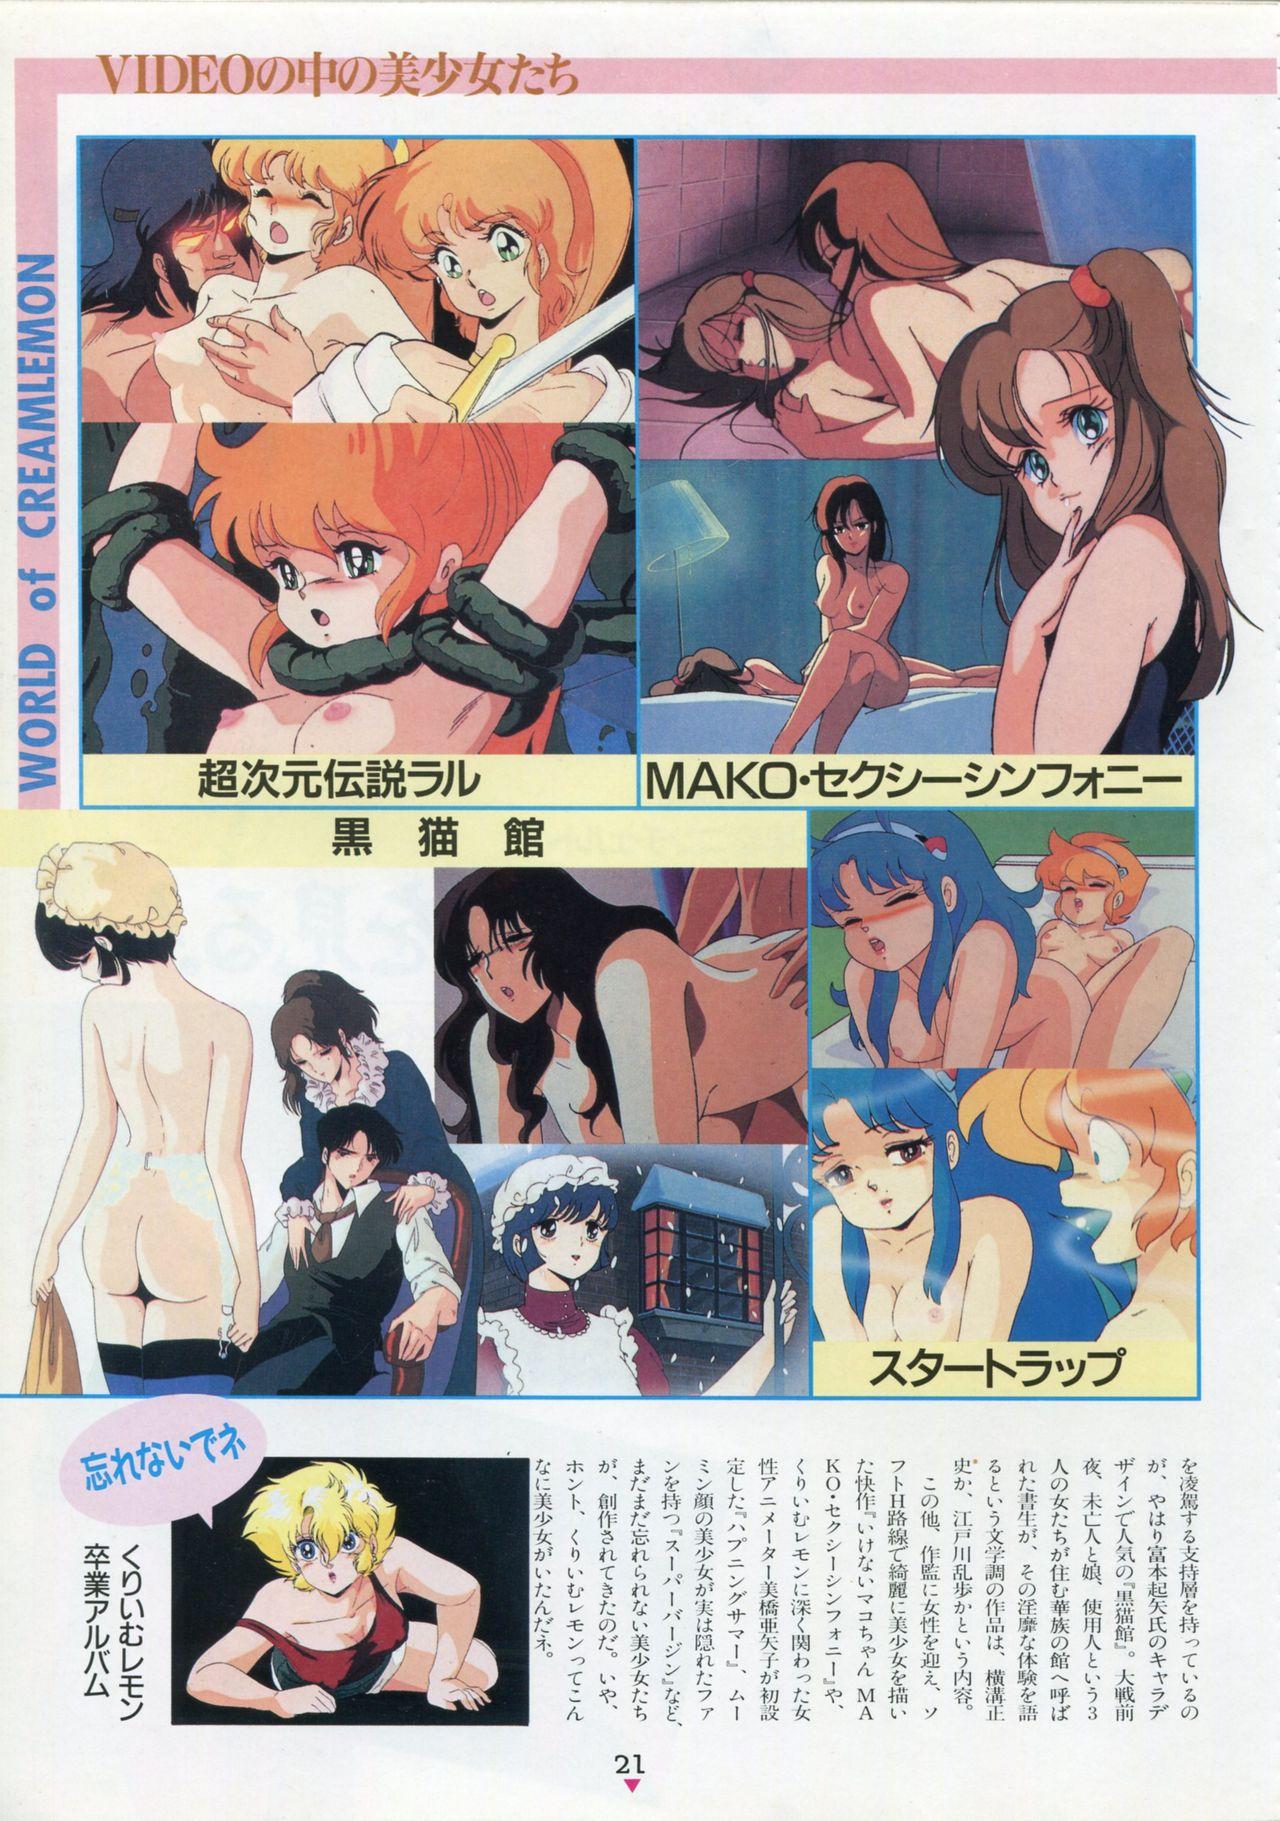 Bishoujo Anime Daizenshuu - Adult Animation Video Catalog 1991 16